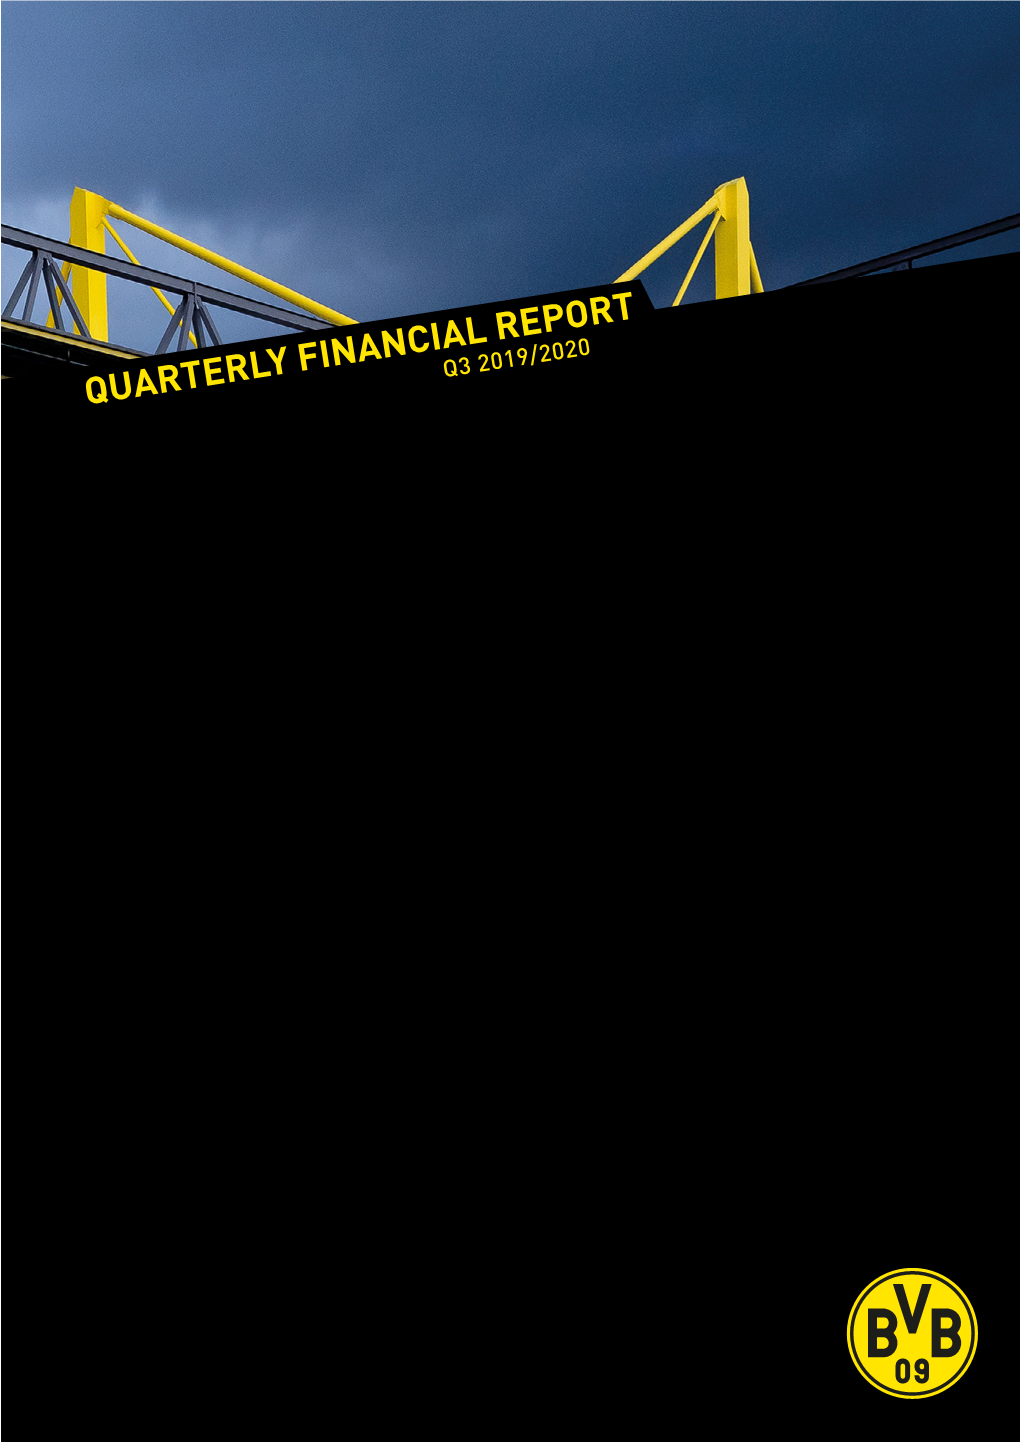 Bvb Quarterly Financial Report Q3 2019/2020